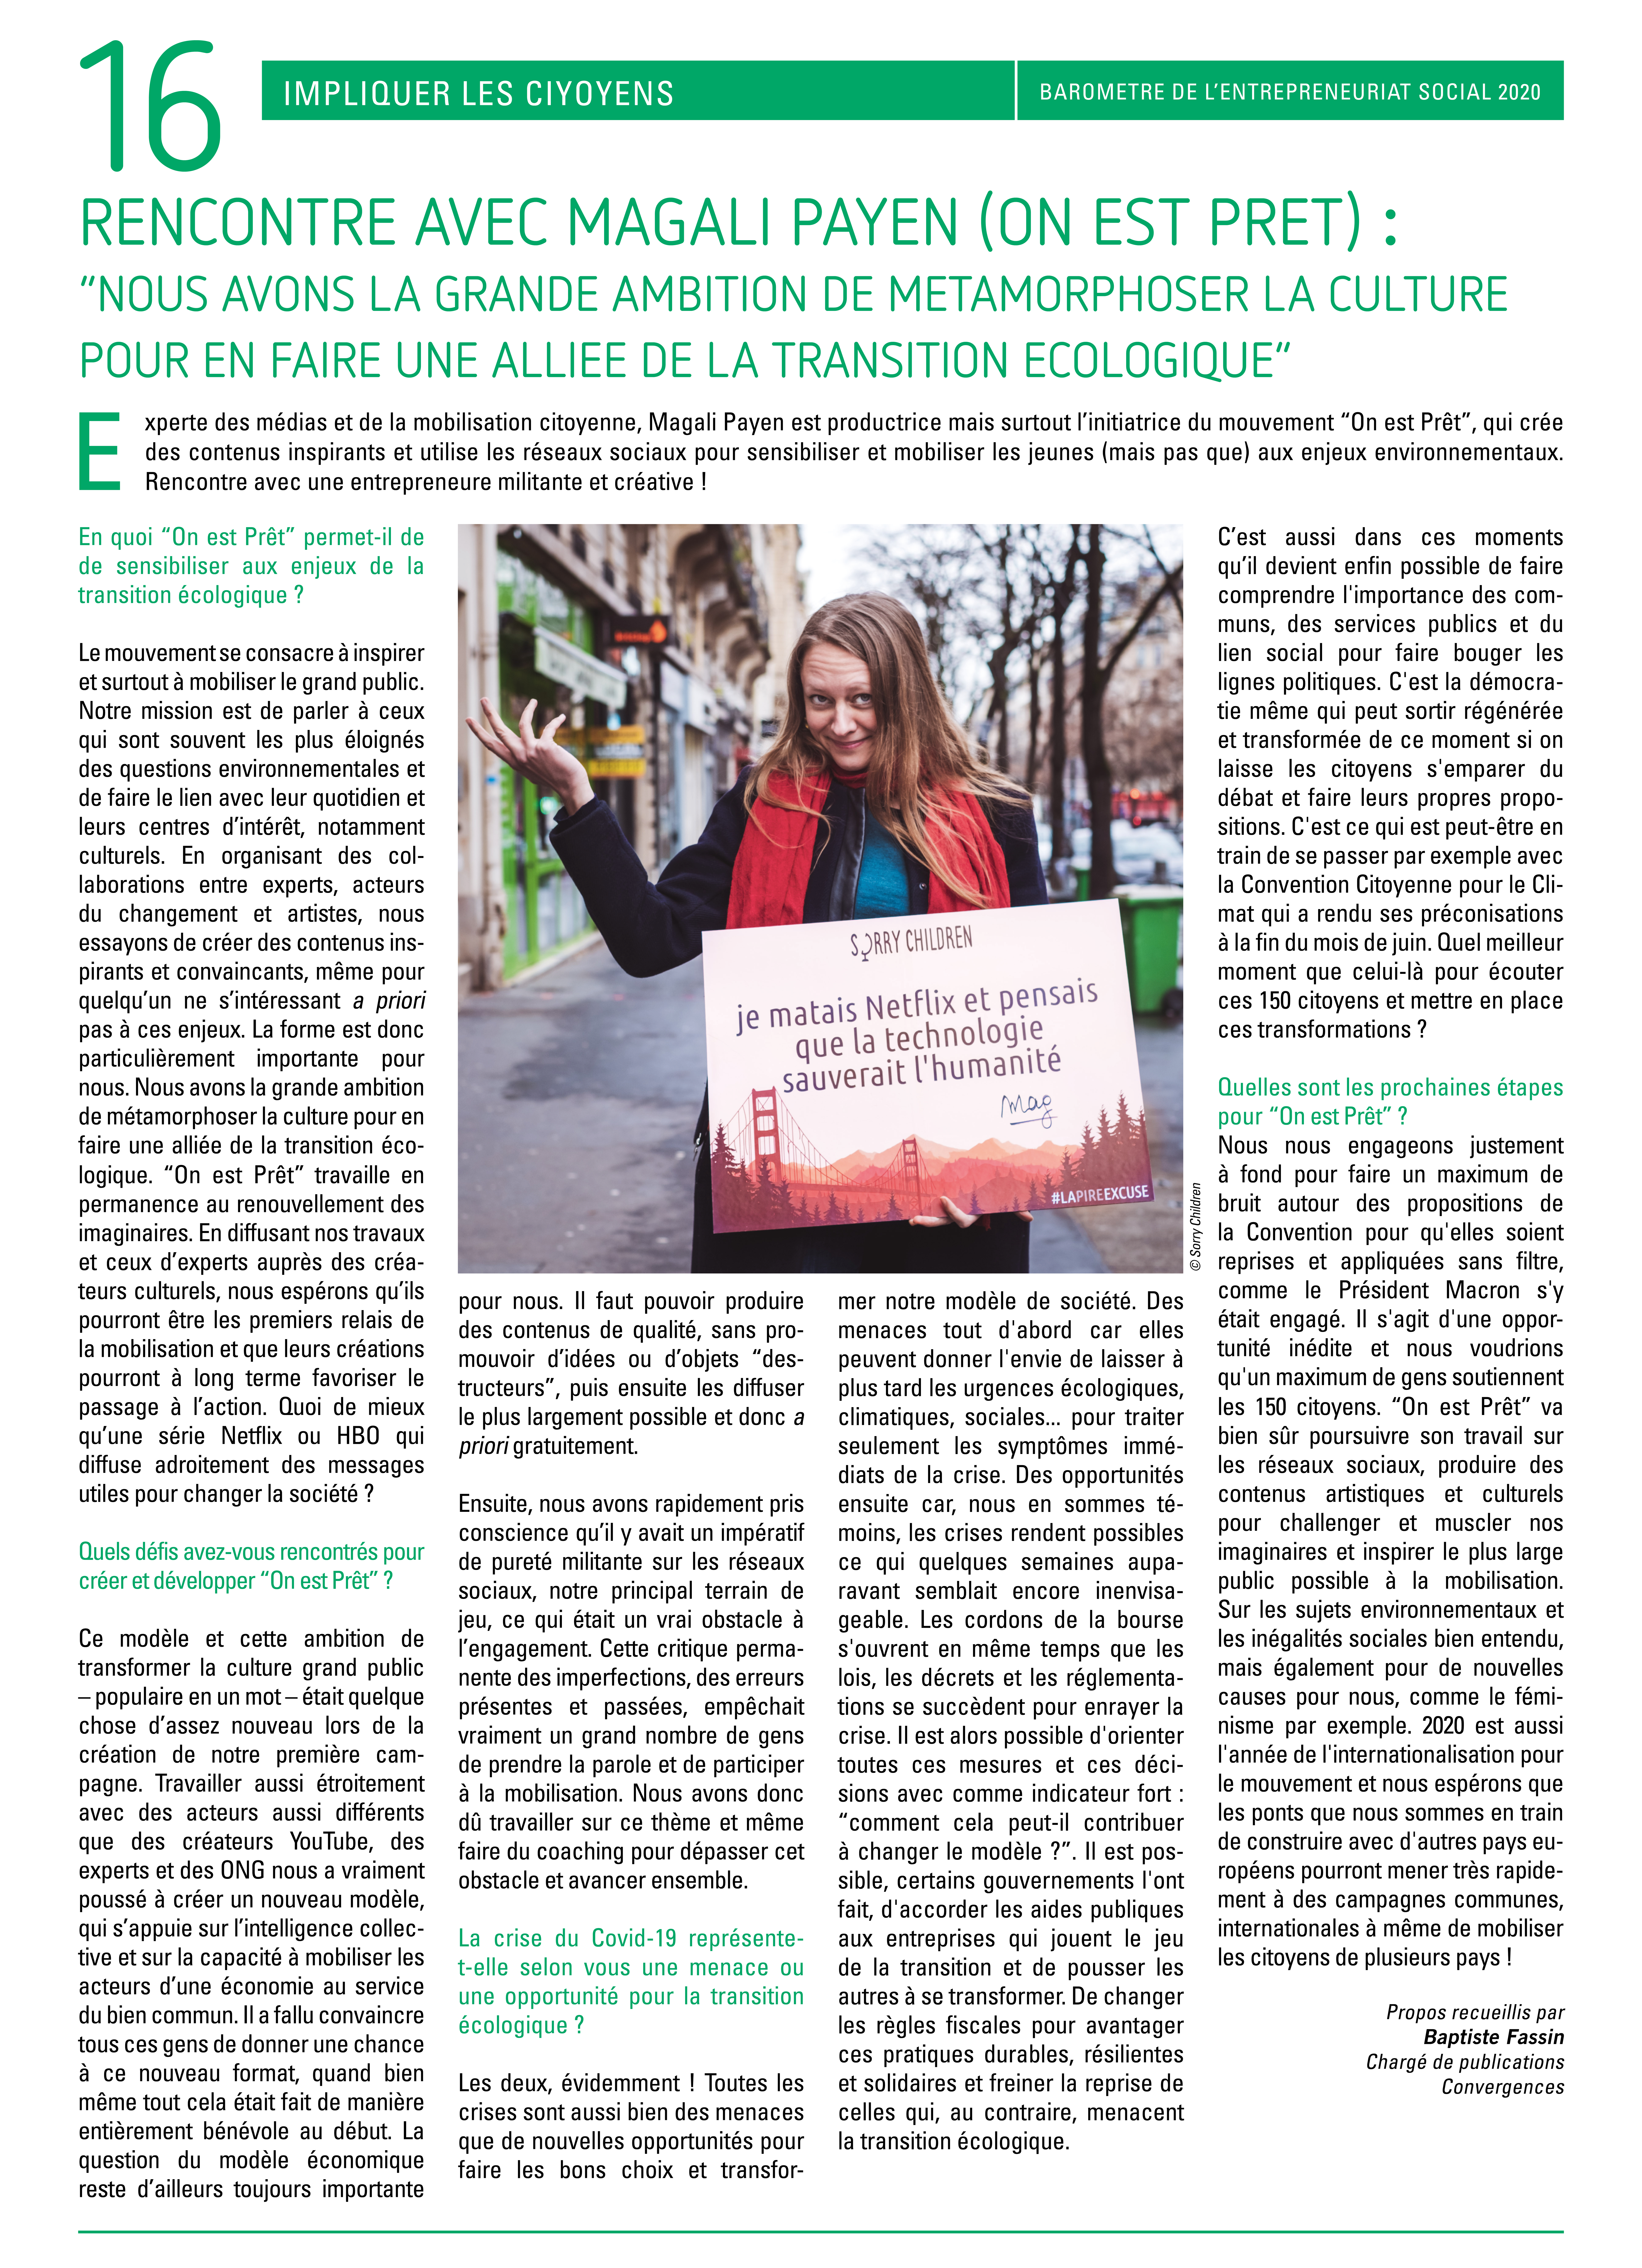 Interview with Magali Payen (On est Prêt)